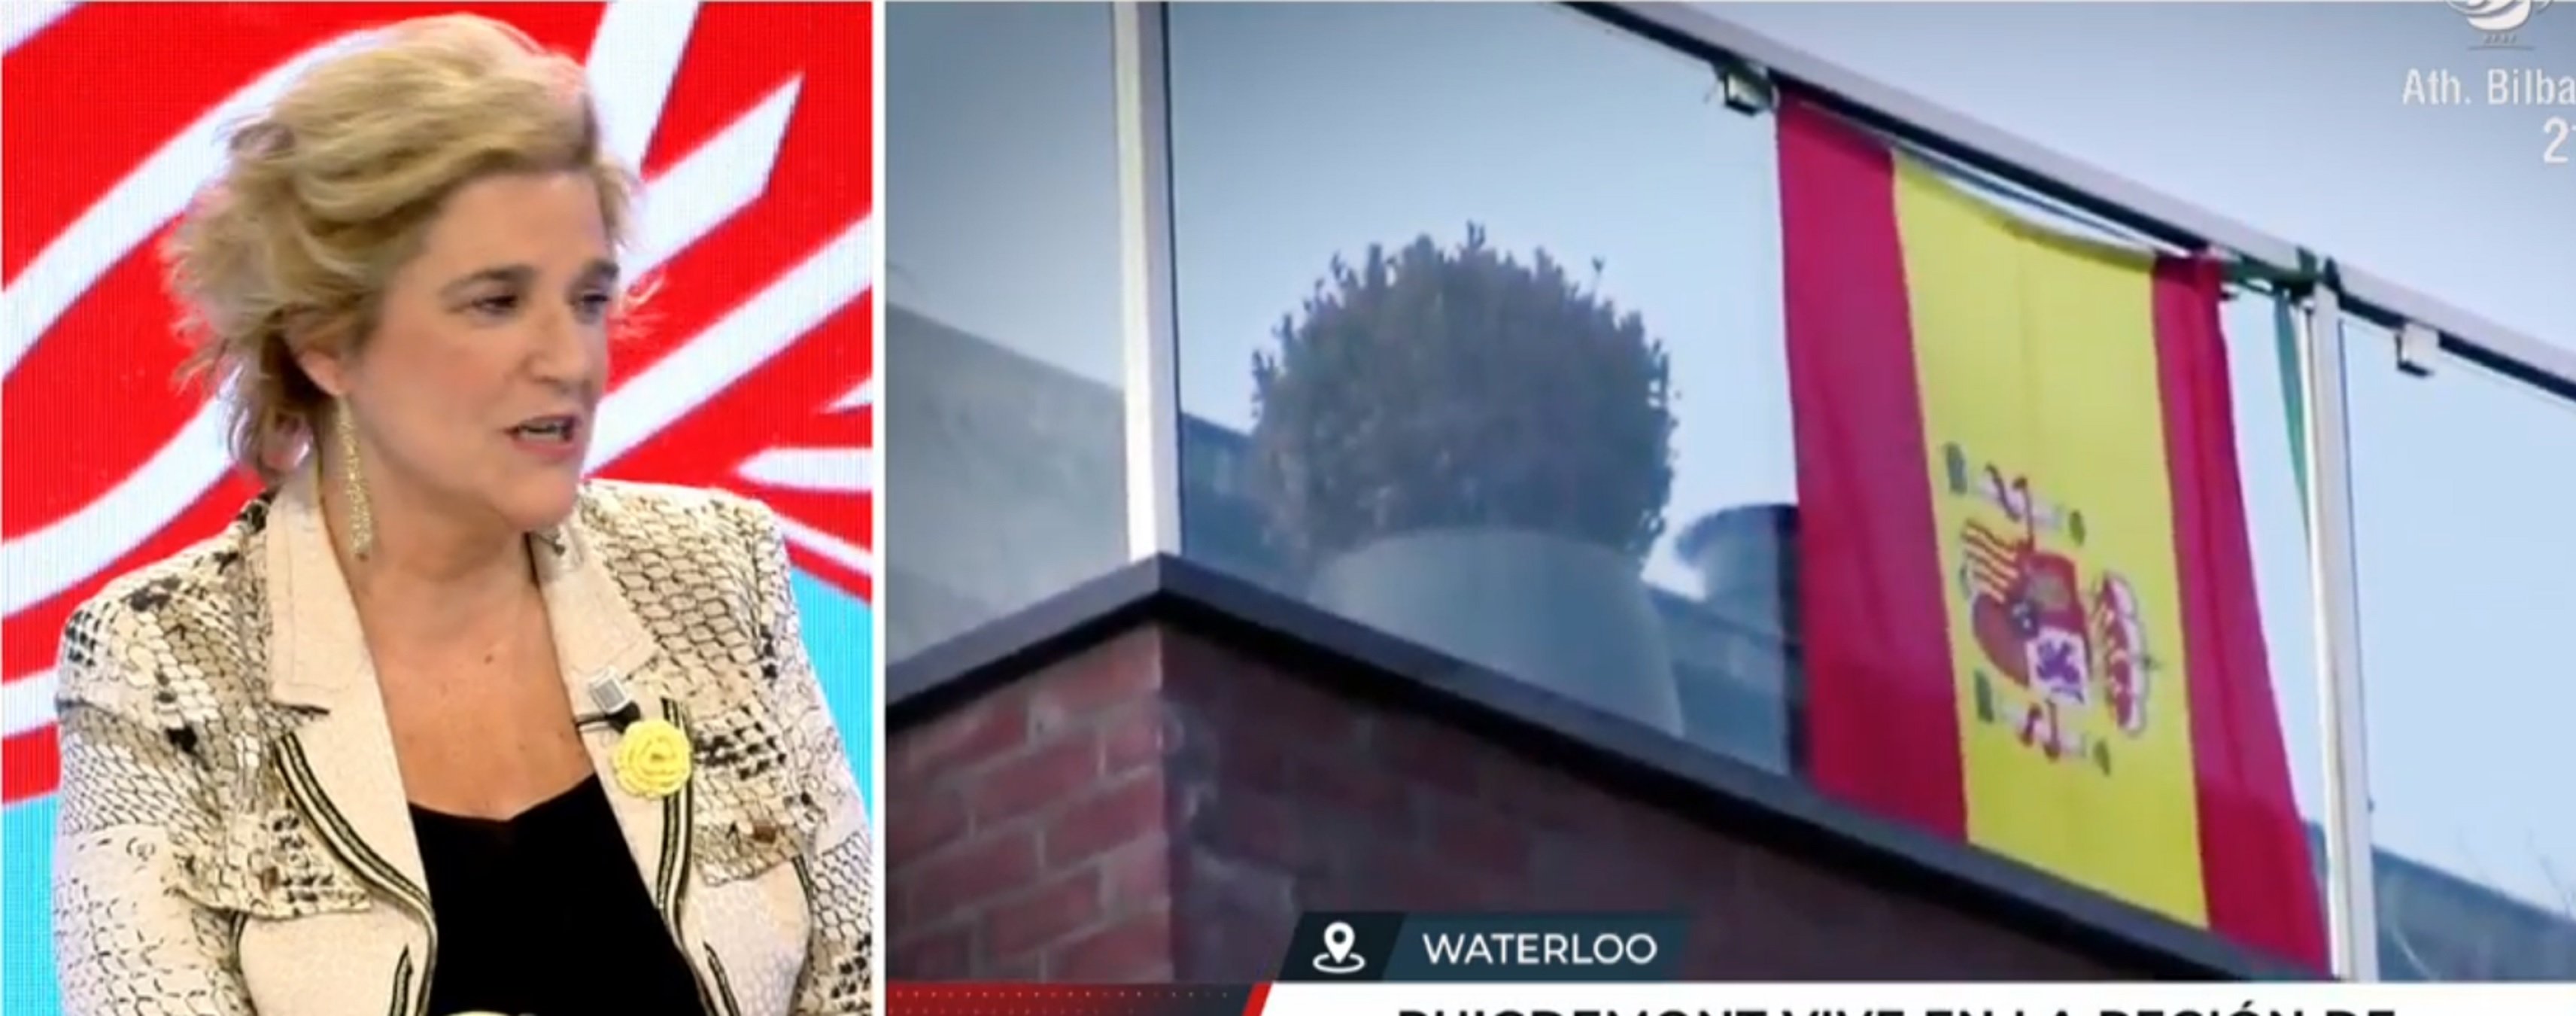 Rahola planxa Telecinco quan ensenyen rojigualdas als balcons de Waterloo